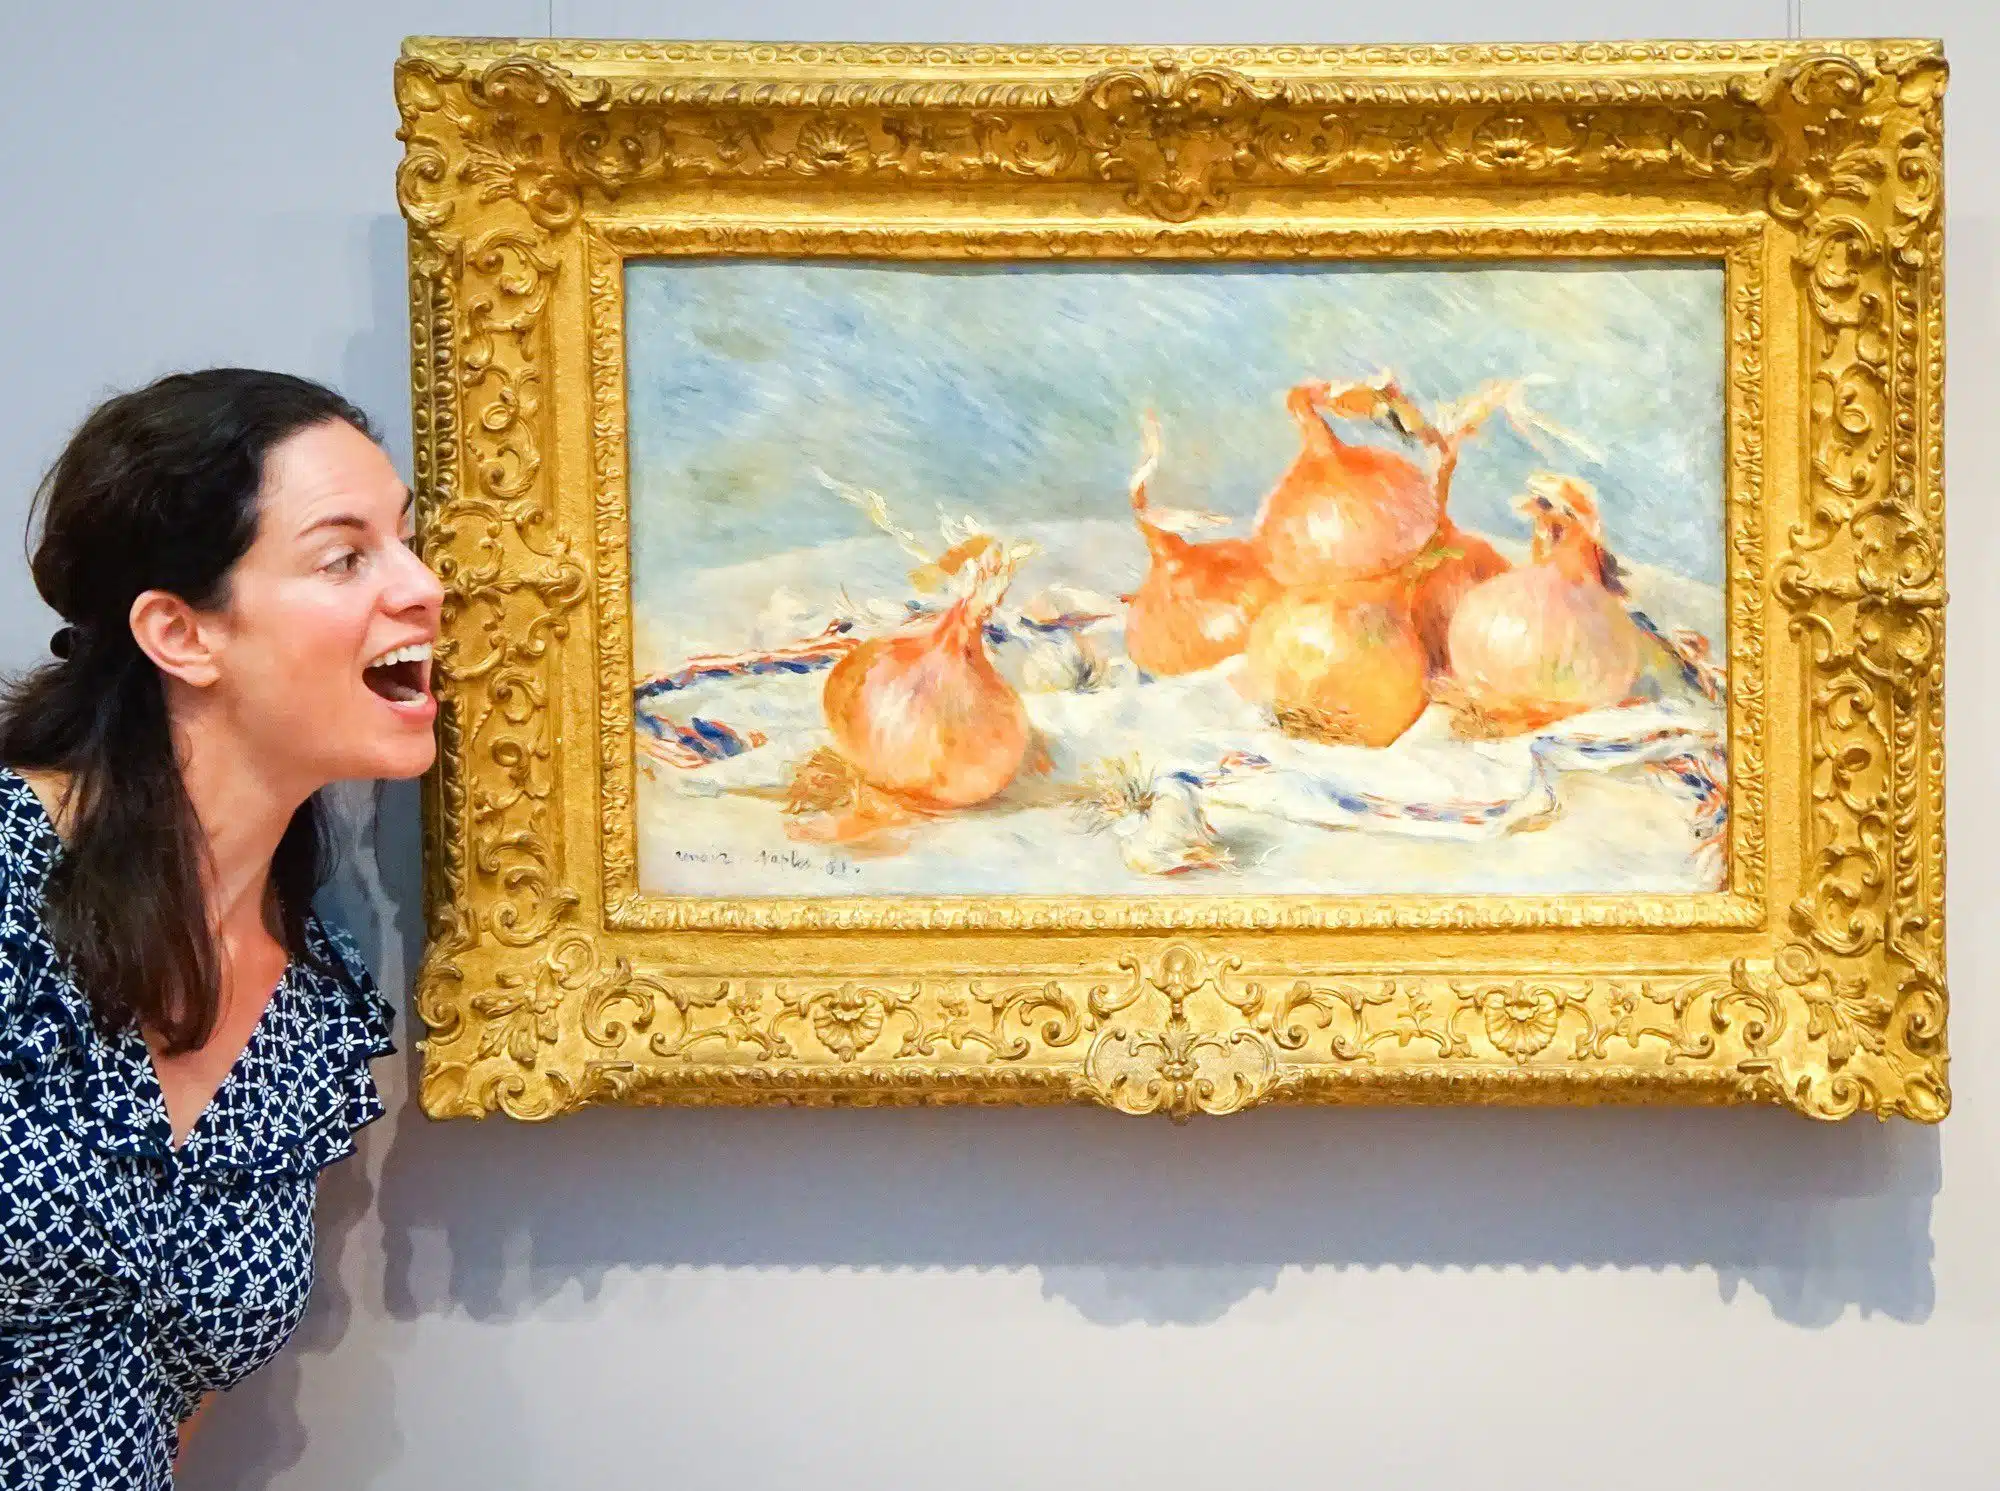 My favorite ever painting: Renoir's "Onions."